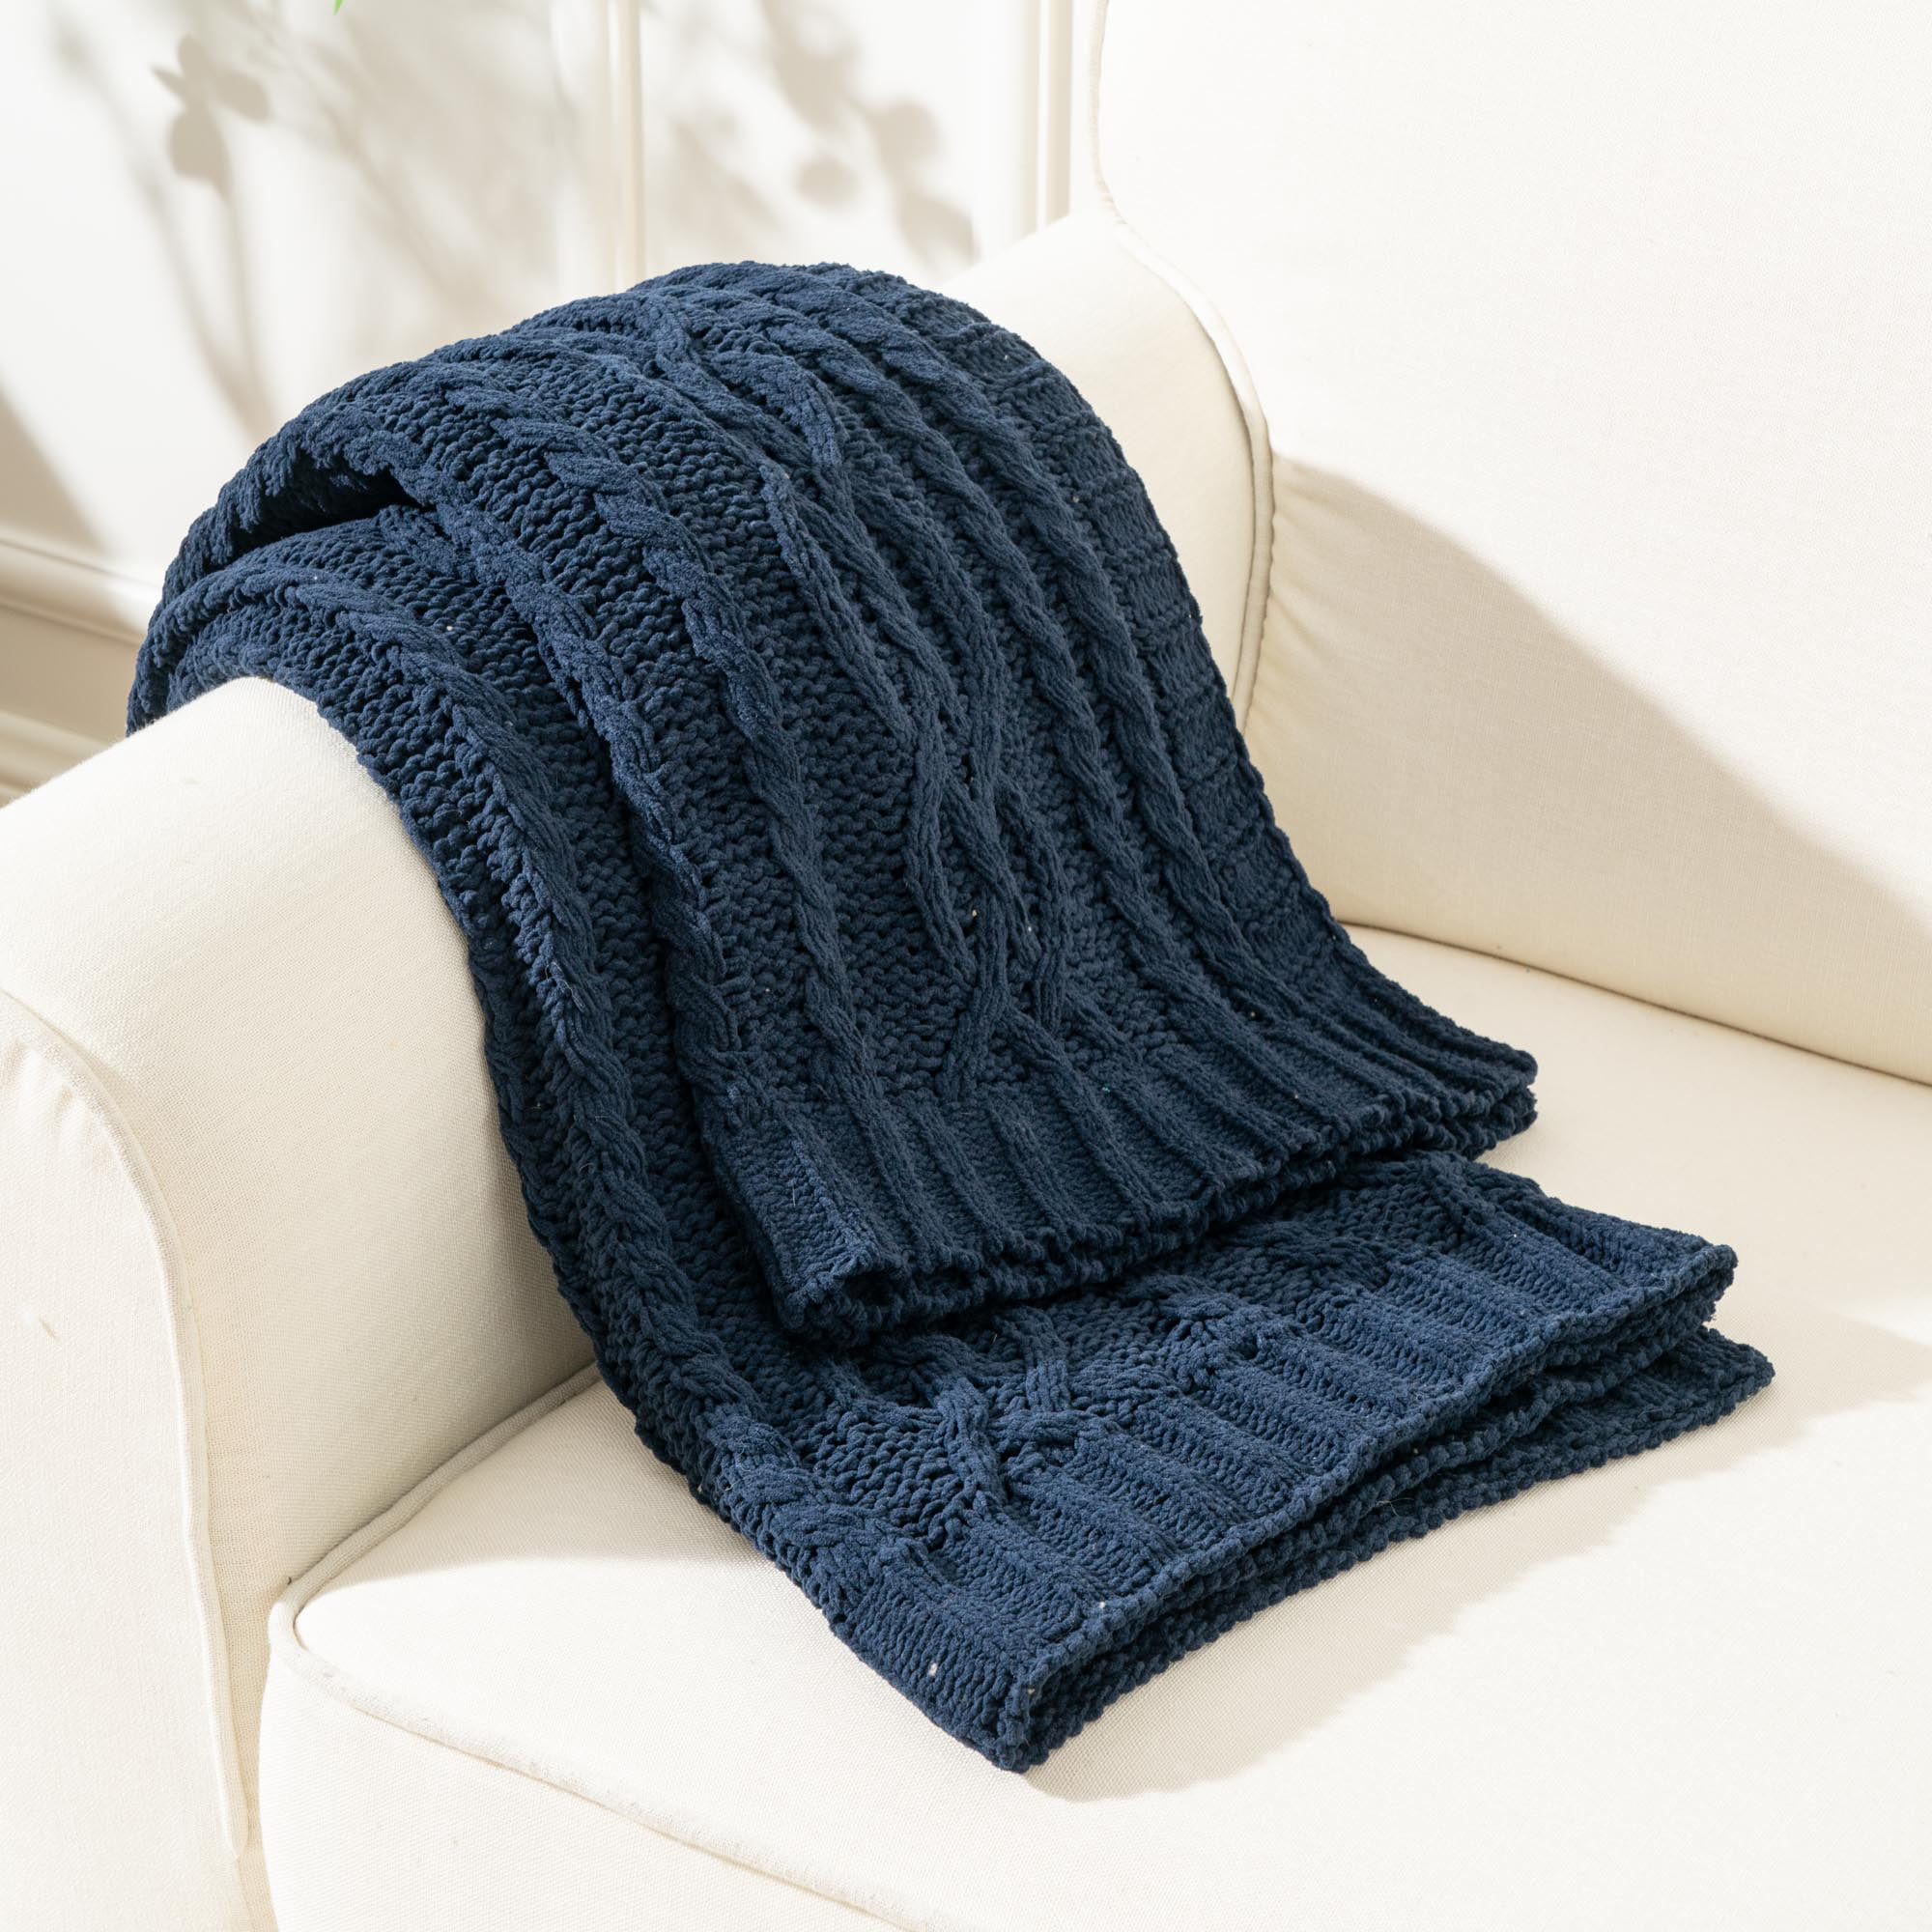 Yeti Snowbrawl Throw Blanket for Sale by LethalChicken